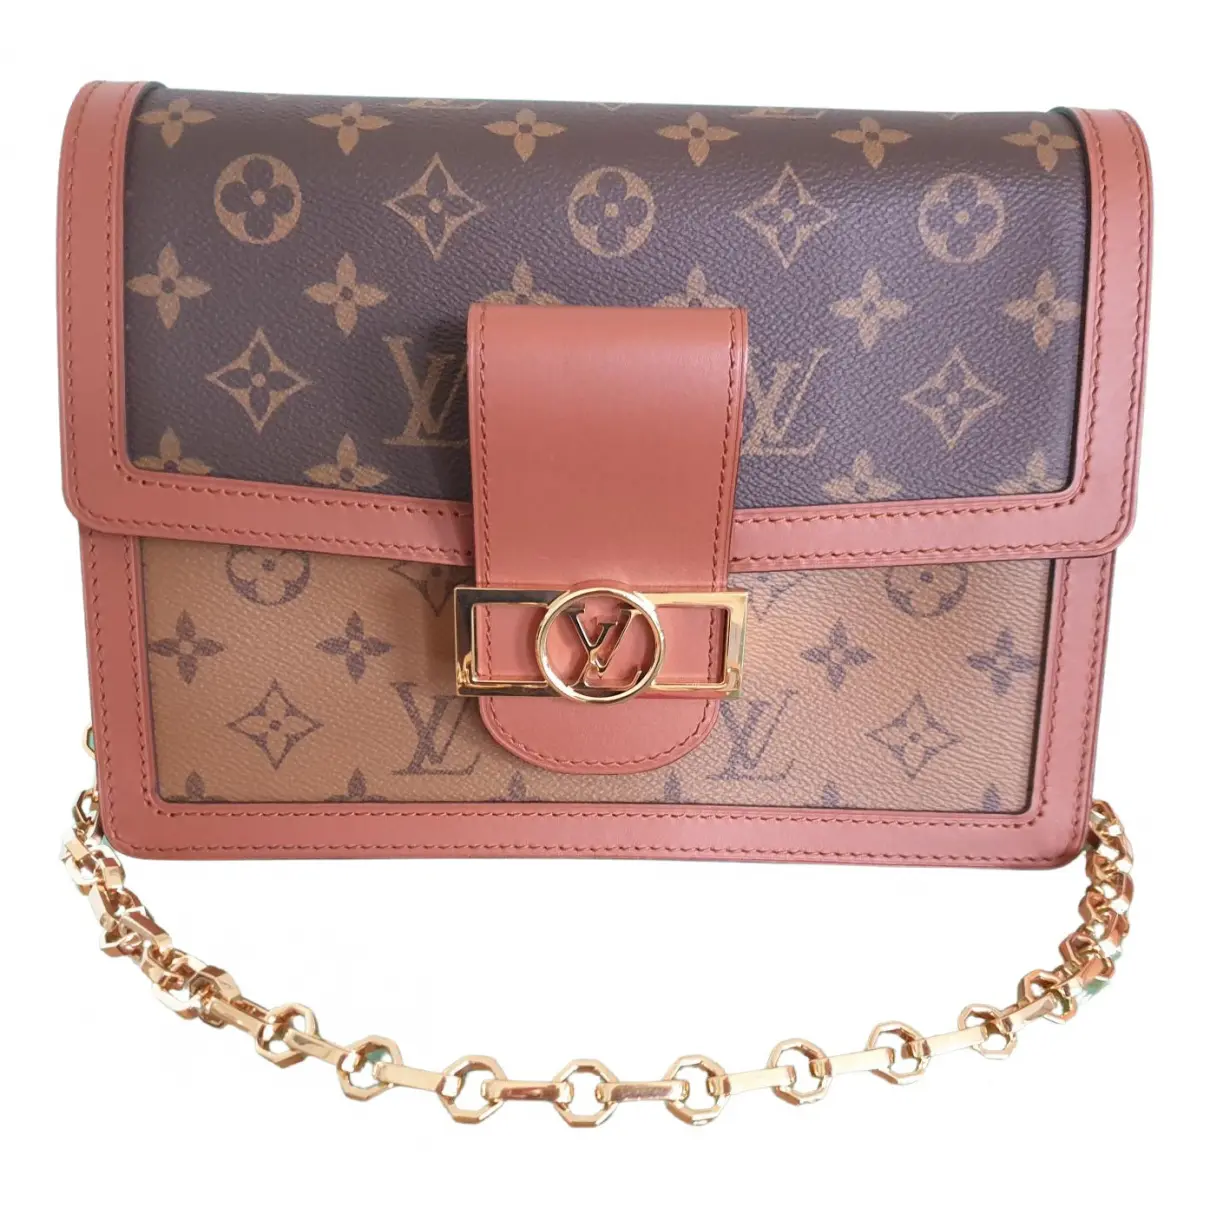 Dauphine MM leather handbag Louis Vuitton